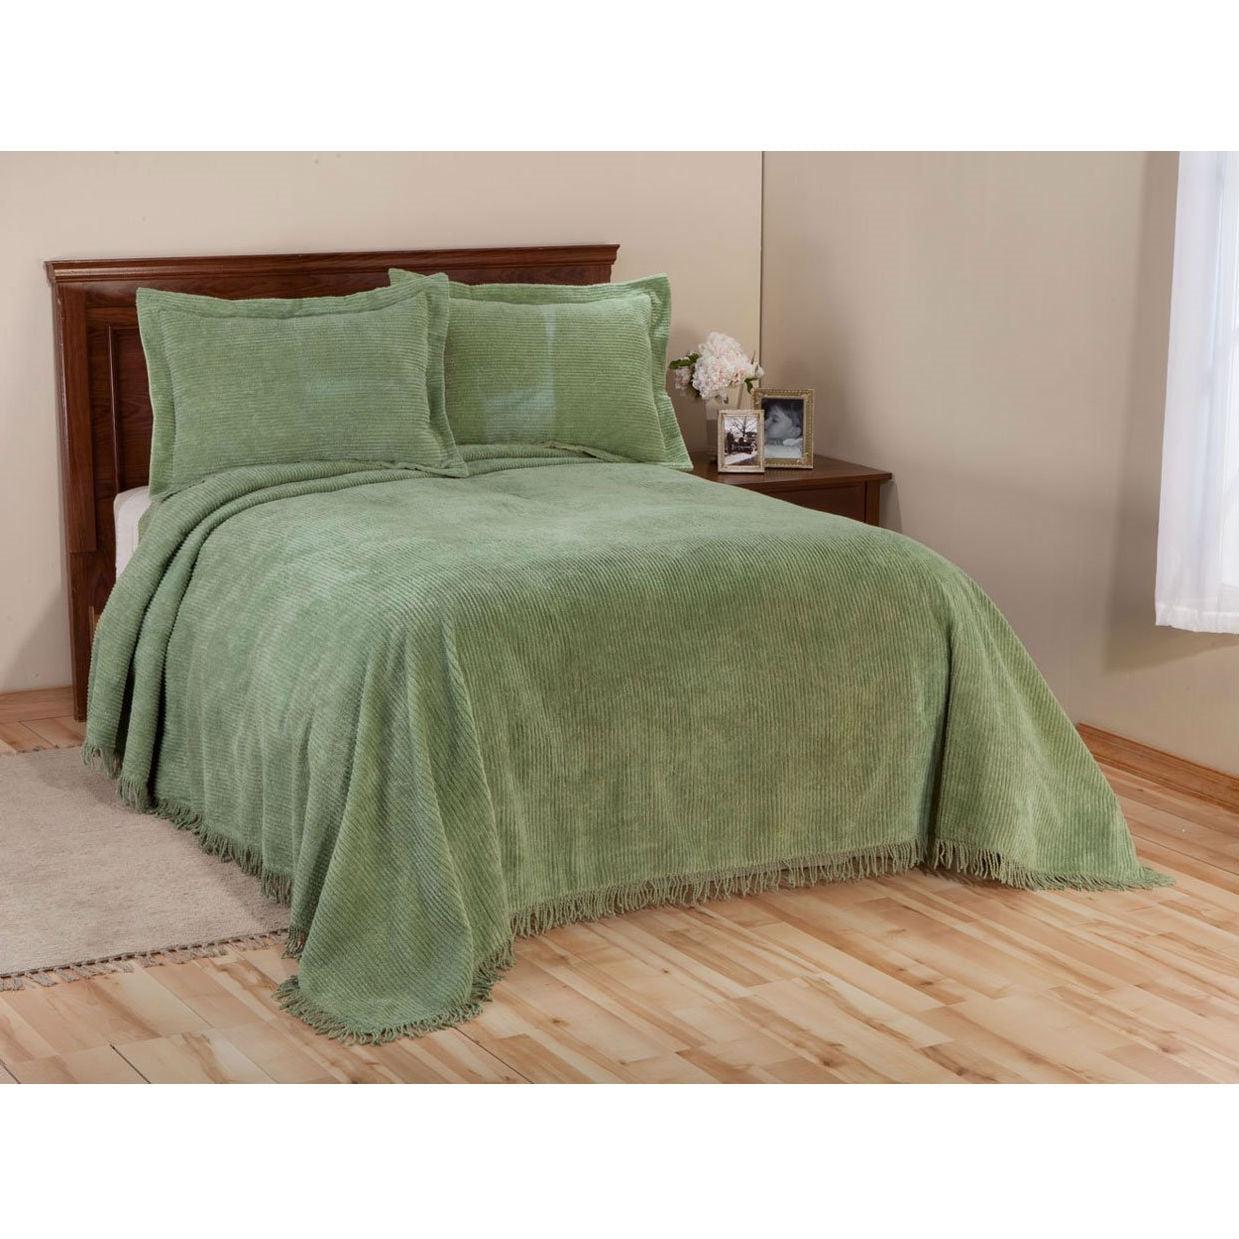 Full size Sage Green Cotton Chenille Bedspread with Fringe Edge - beddingbag.com